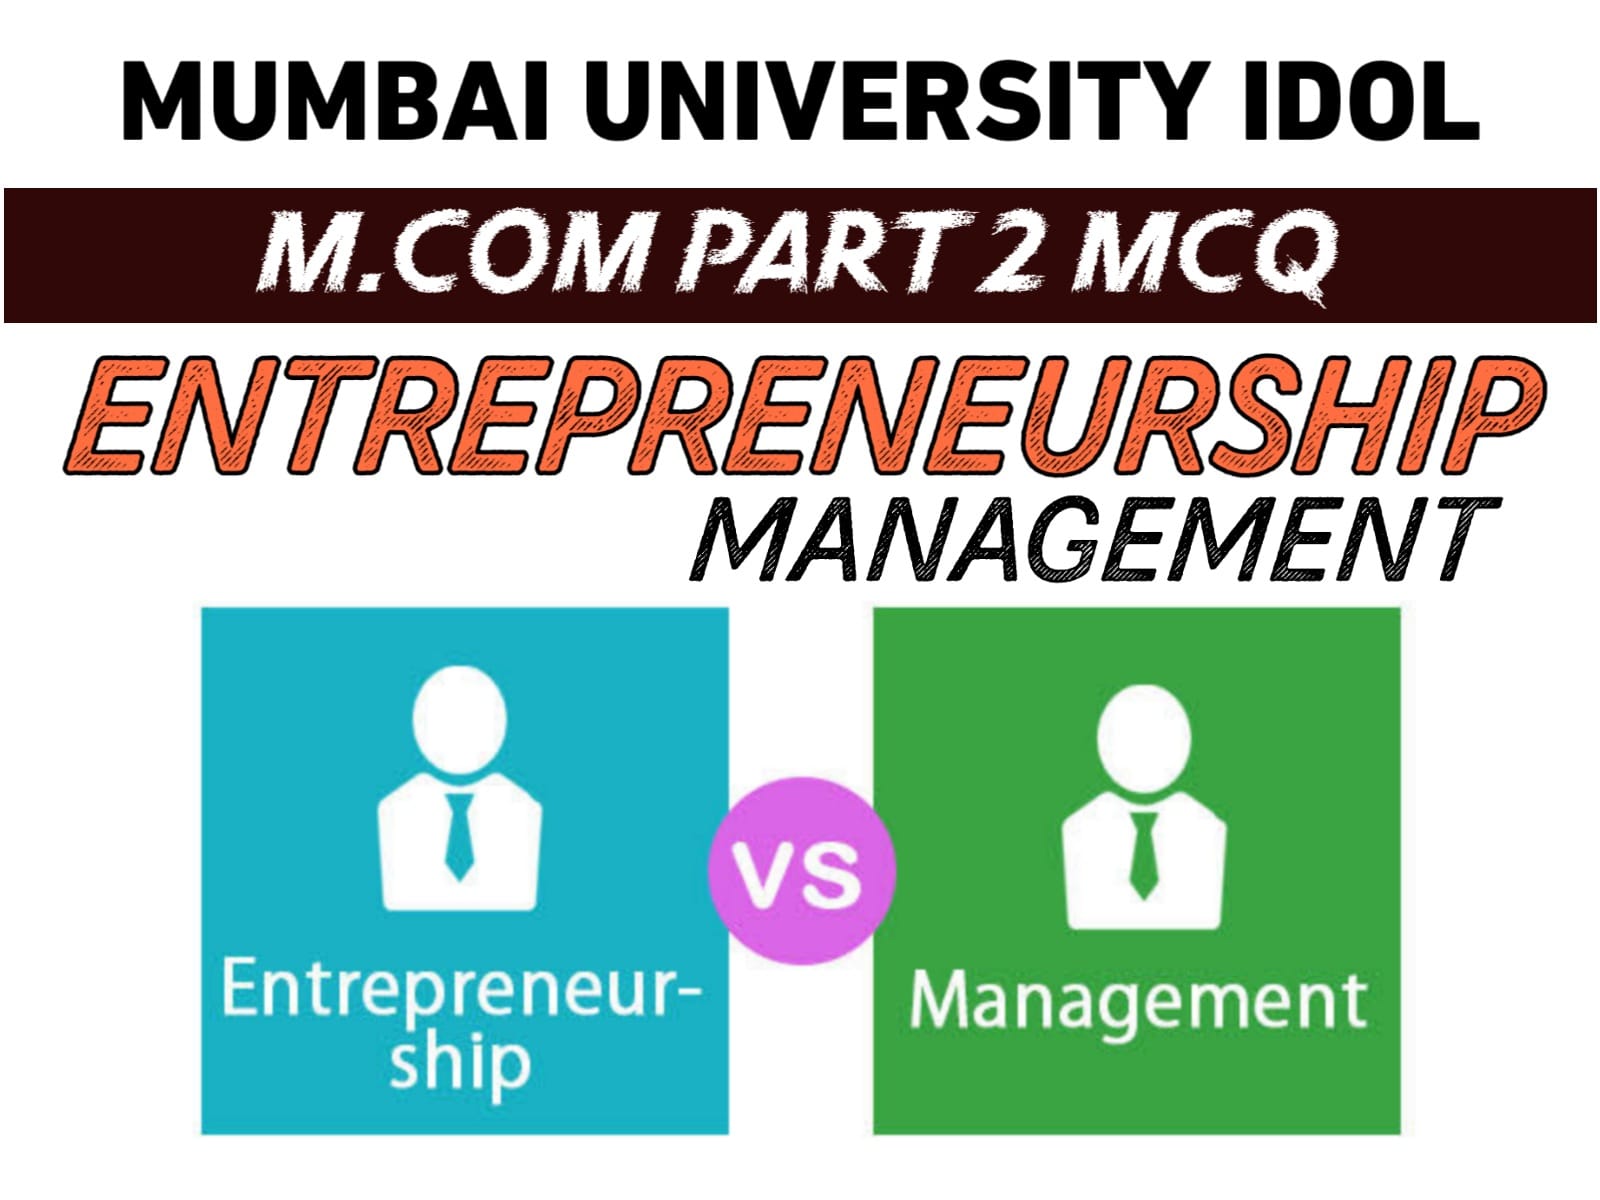 Entrepreneurship Management M.com Part 2 MCQ Pdf